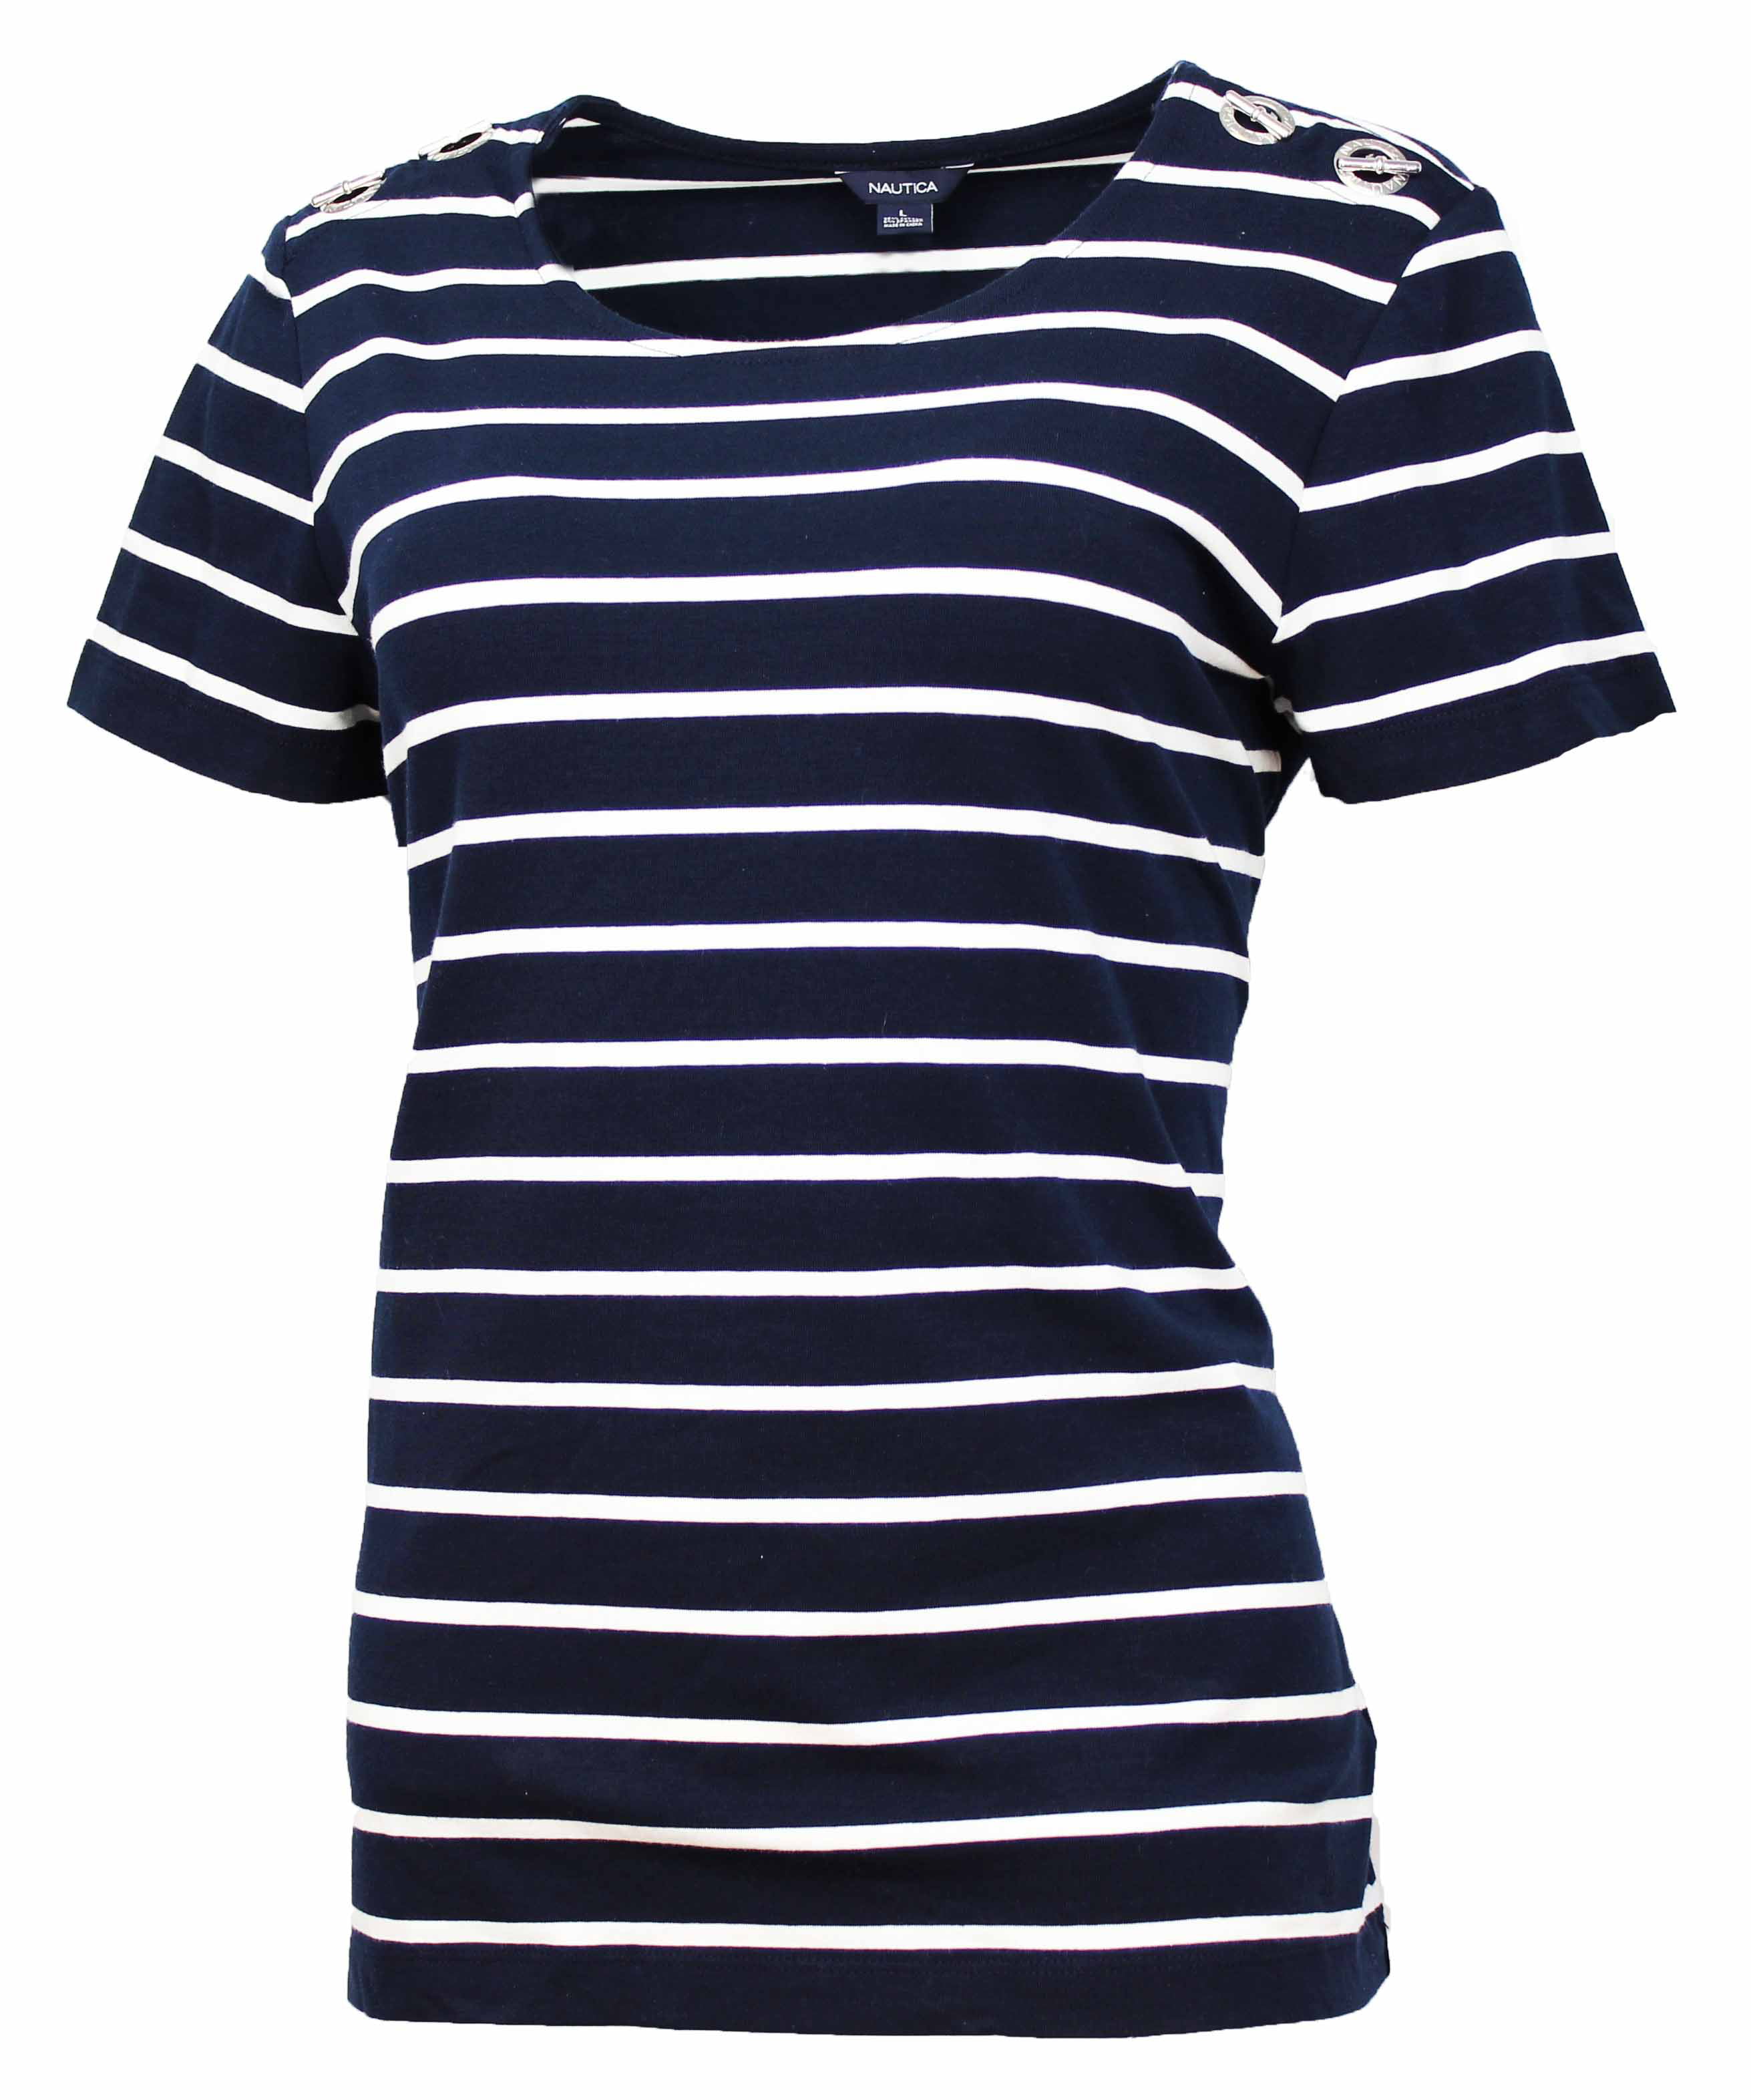 Nautica - Nautica Womens Striped T-Shirt with Shoulder Bar Toggle (Navy